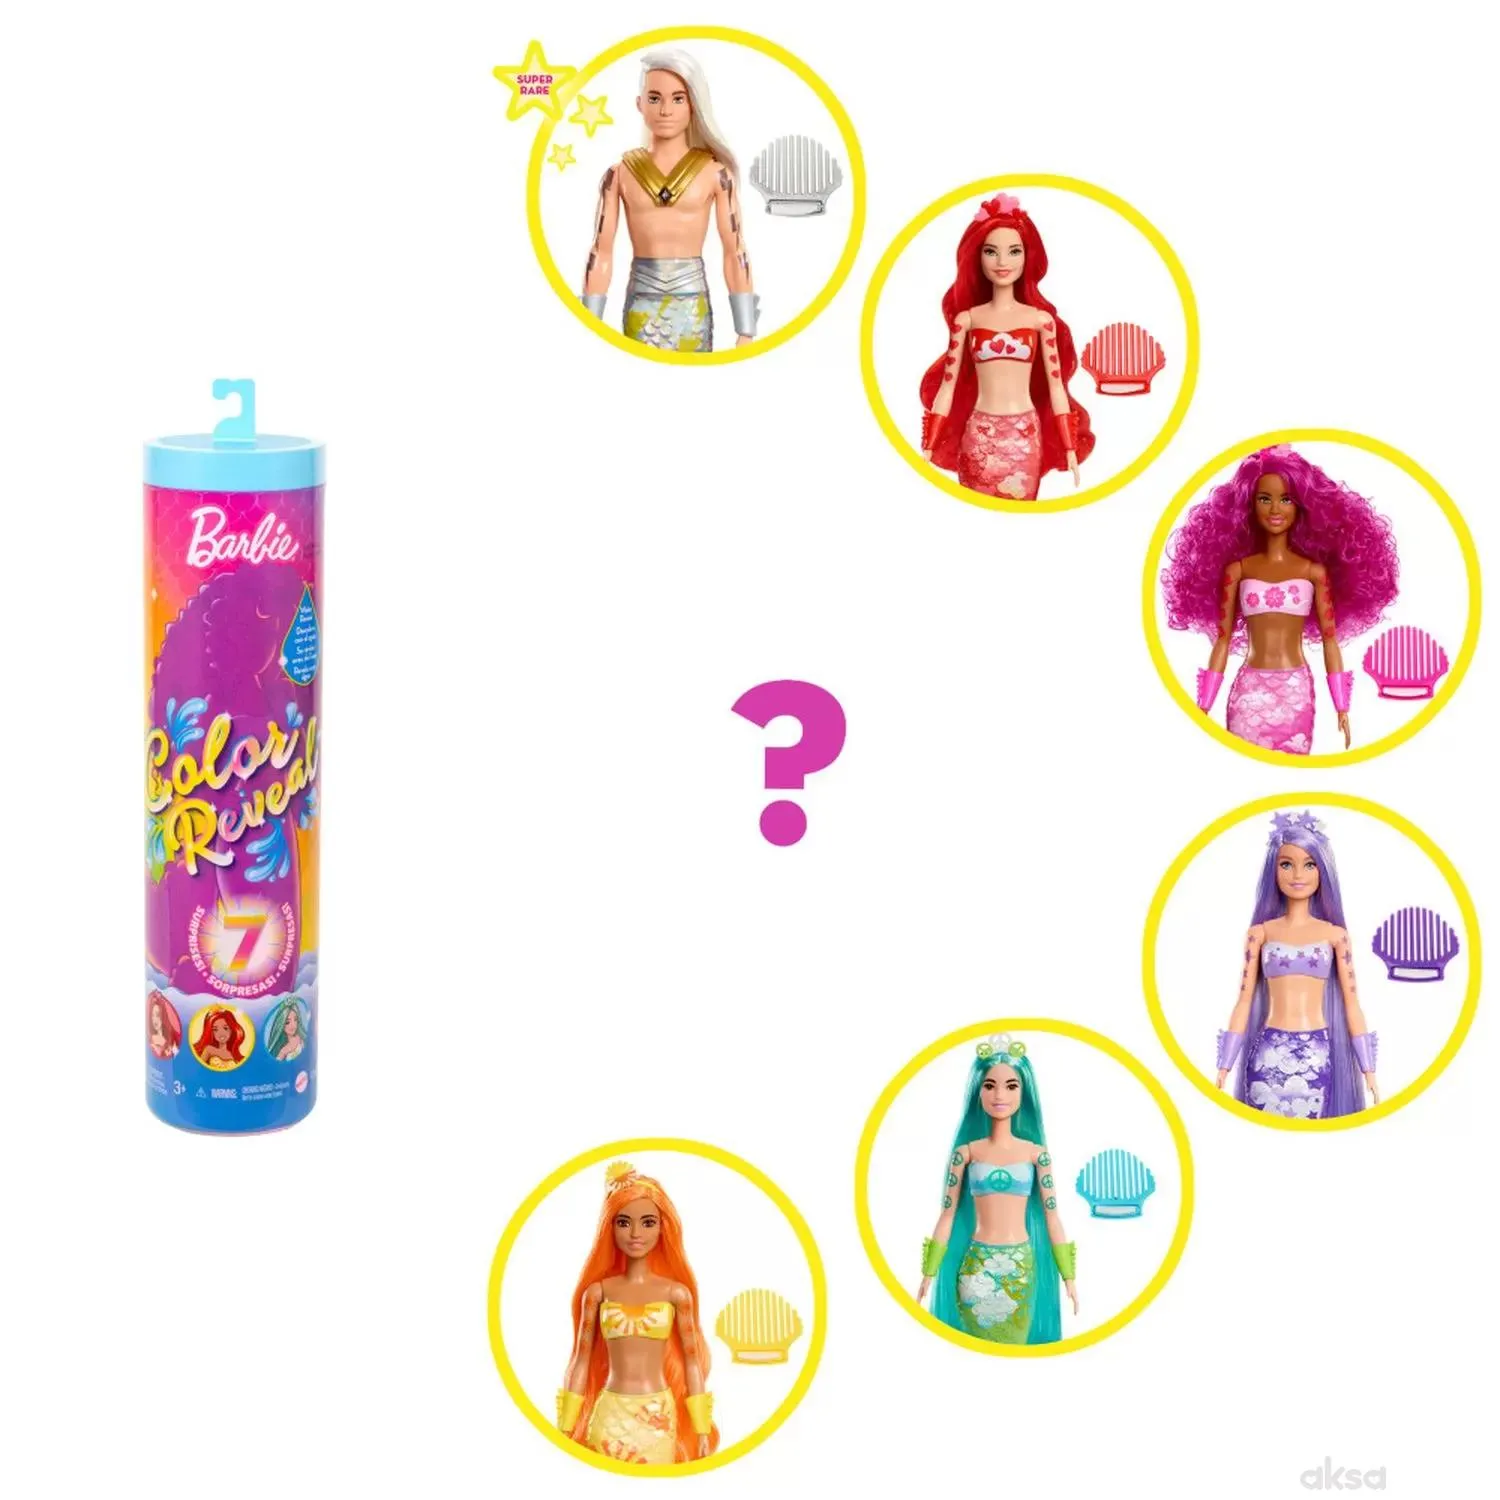 Barbie color reveal sirena 22 